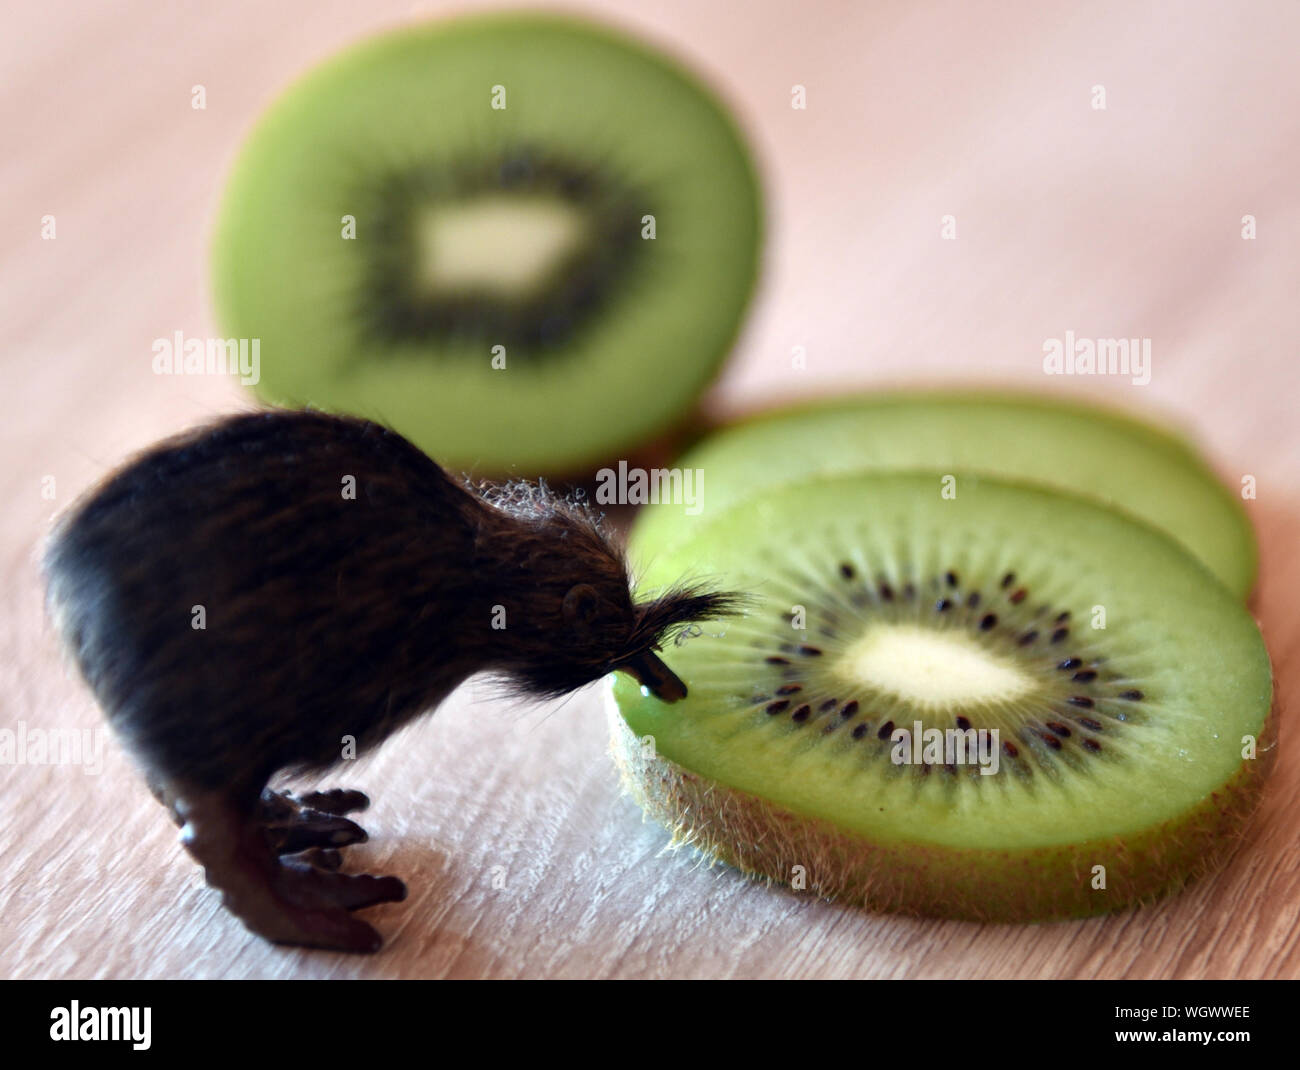 Kiwi Animal High Resolution Stock Photography And Images Alamy